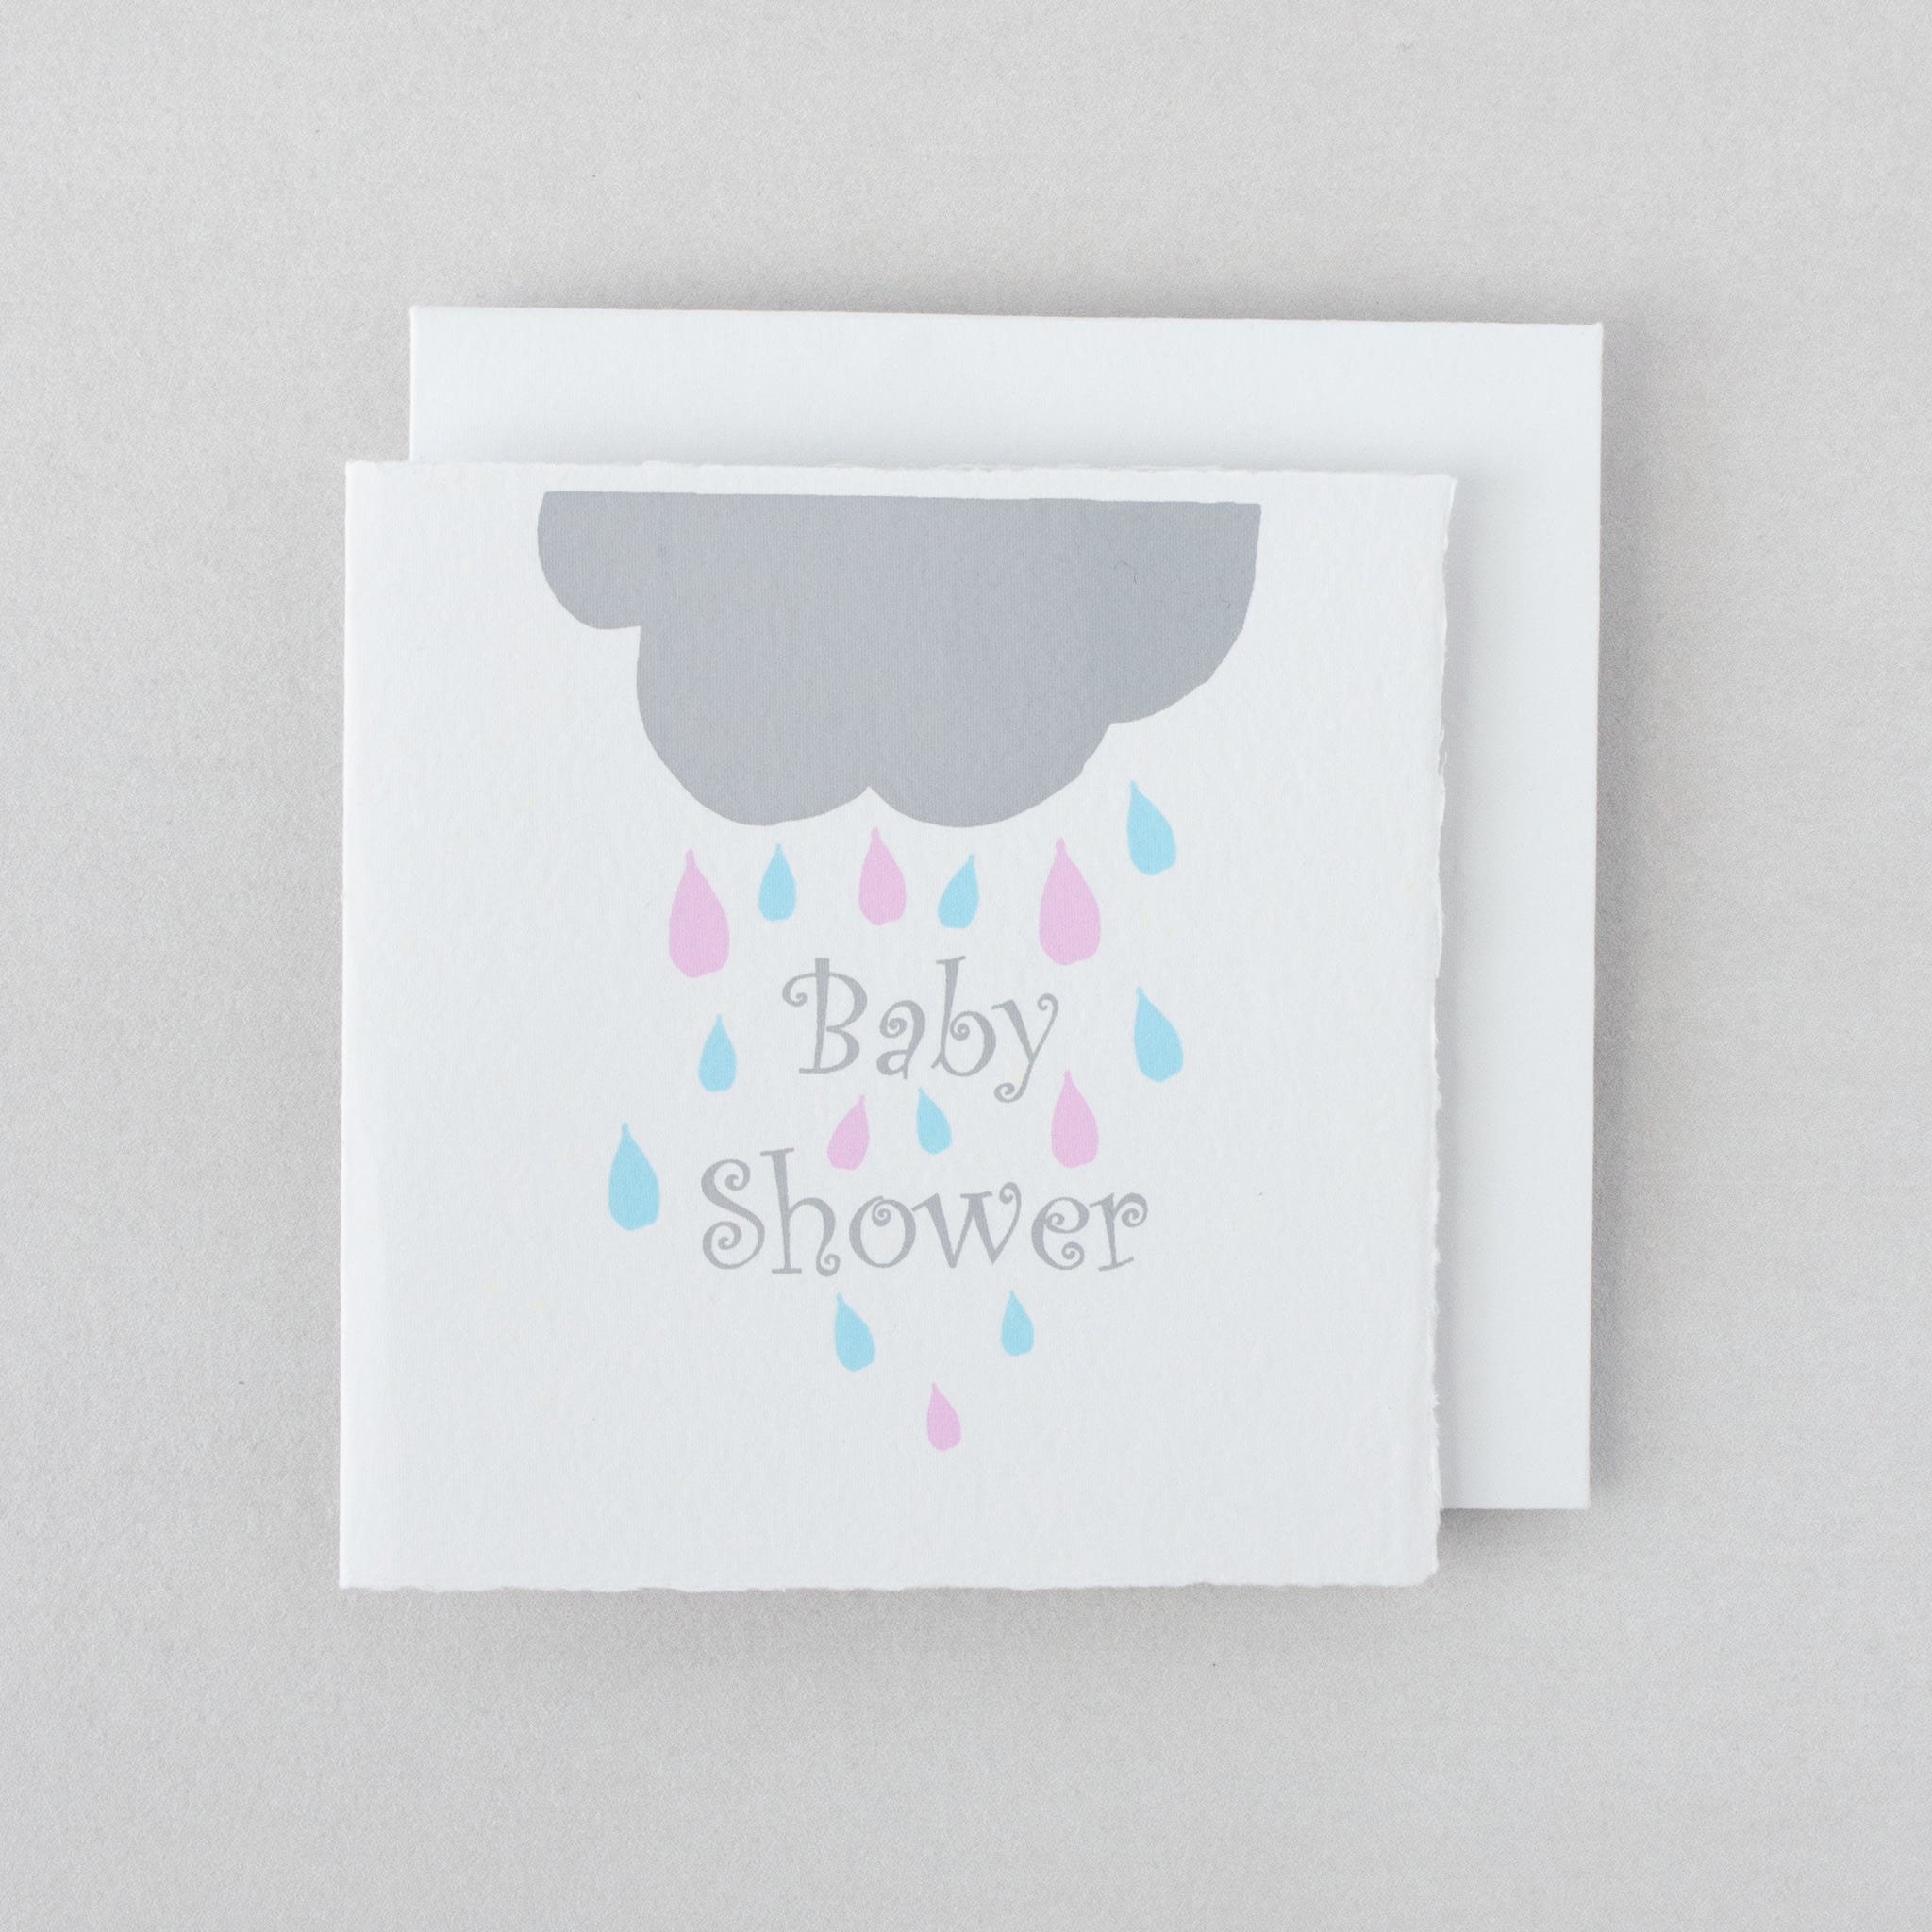 Baby shower and raindrops